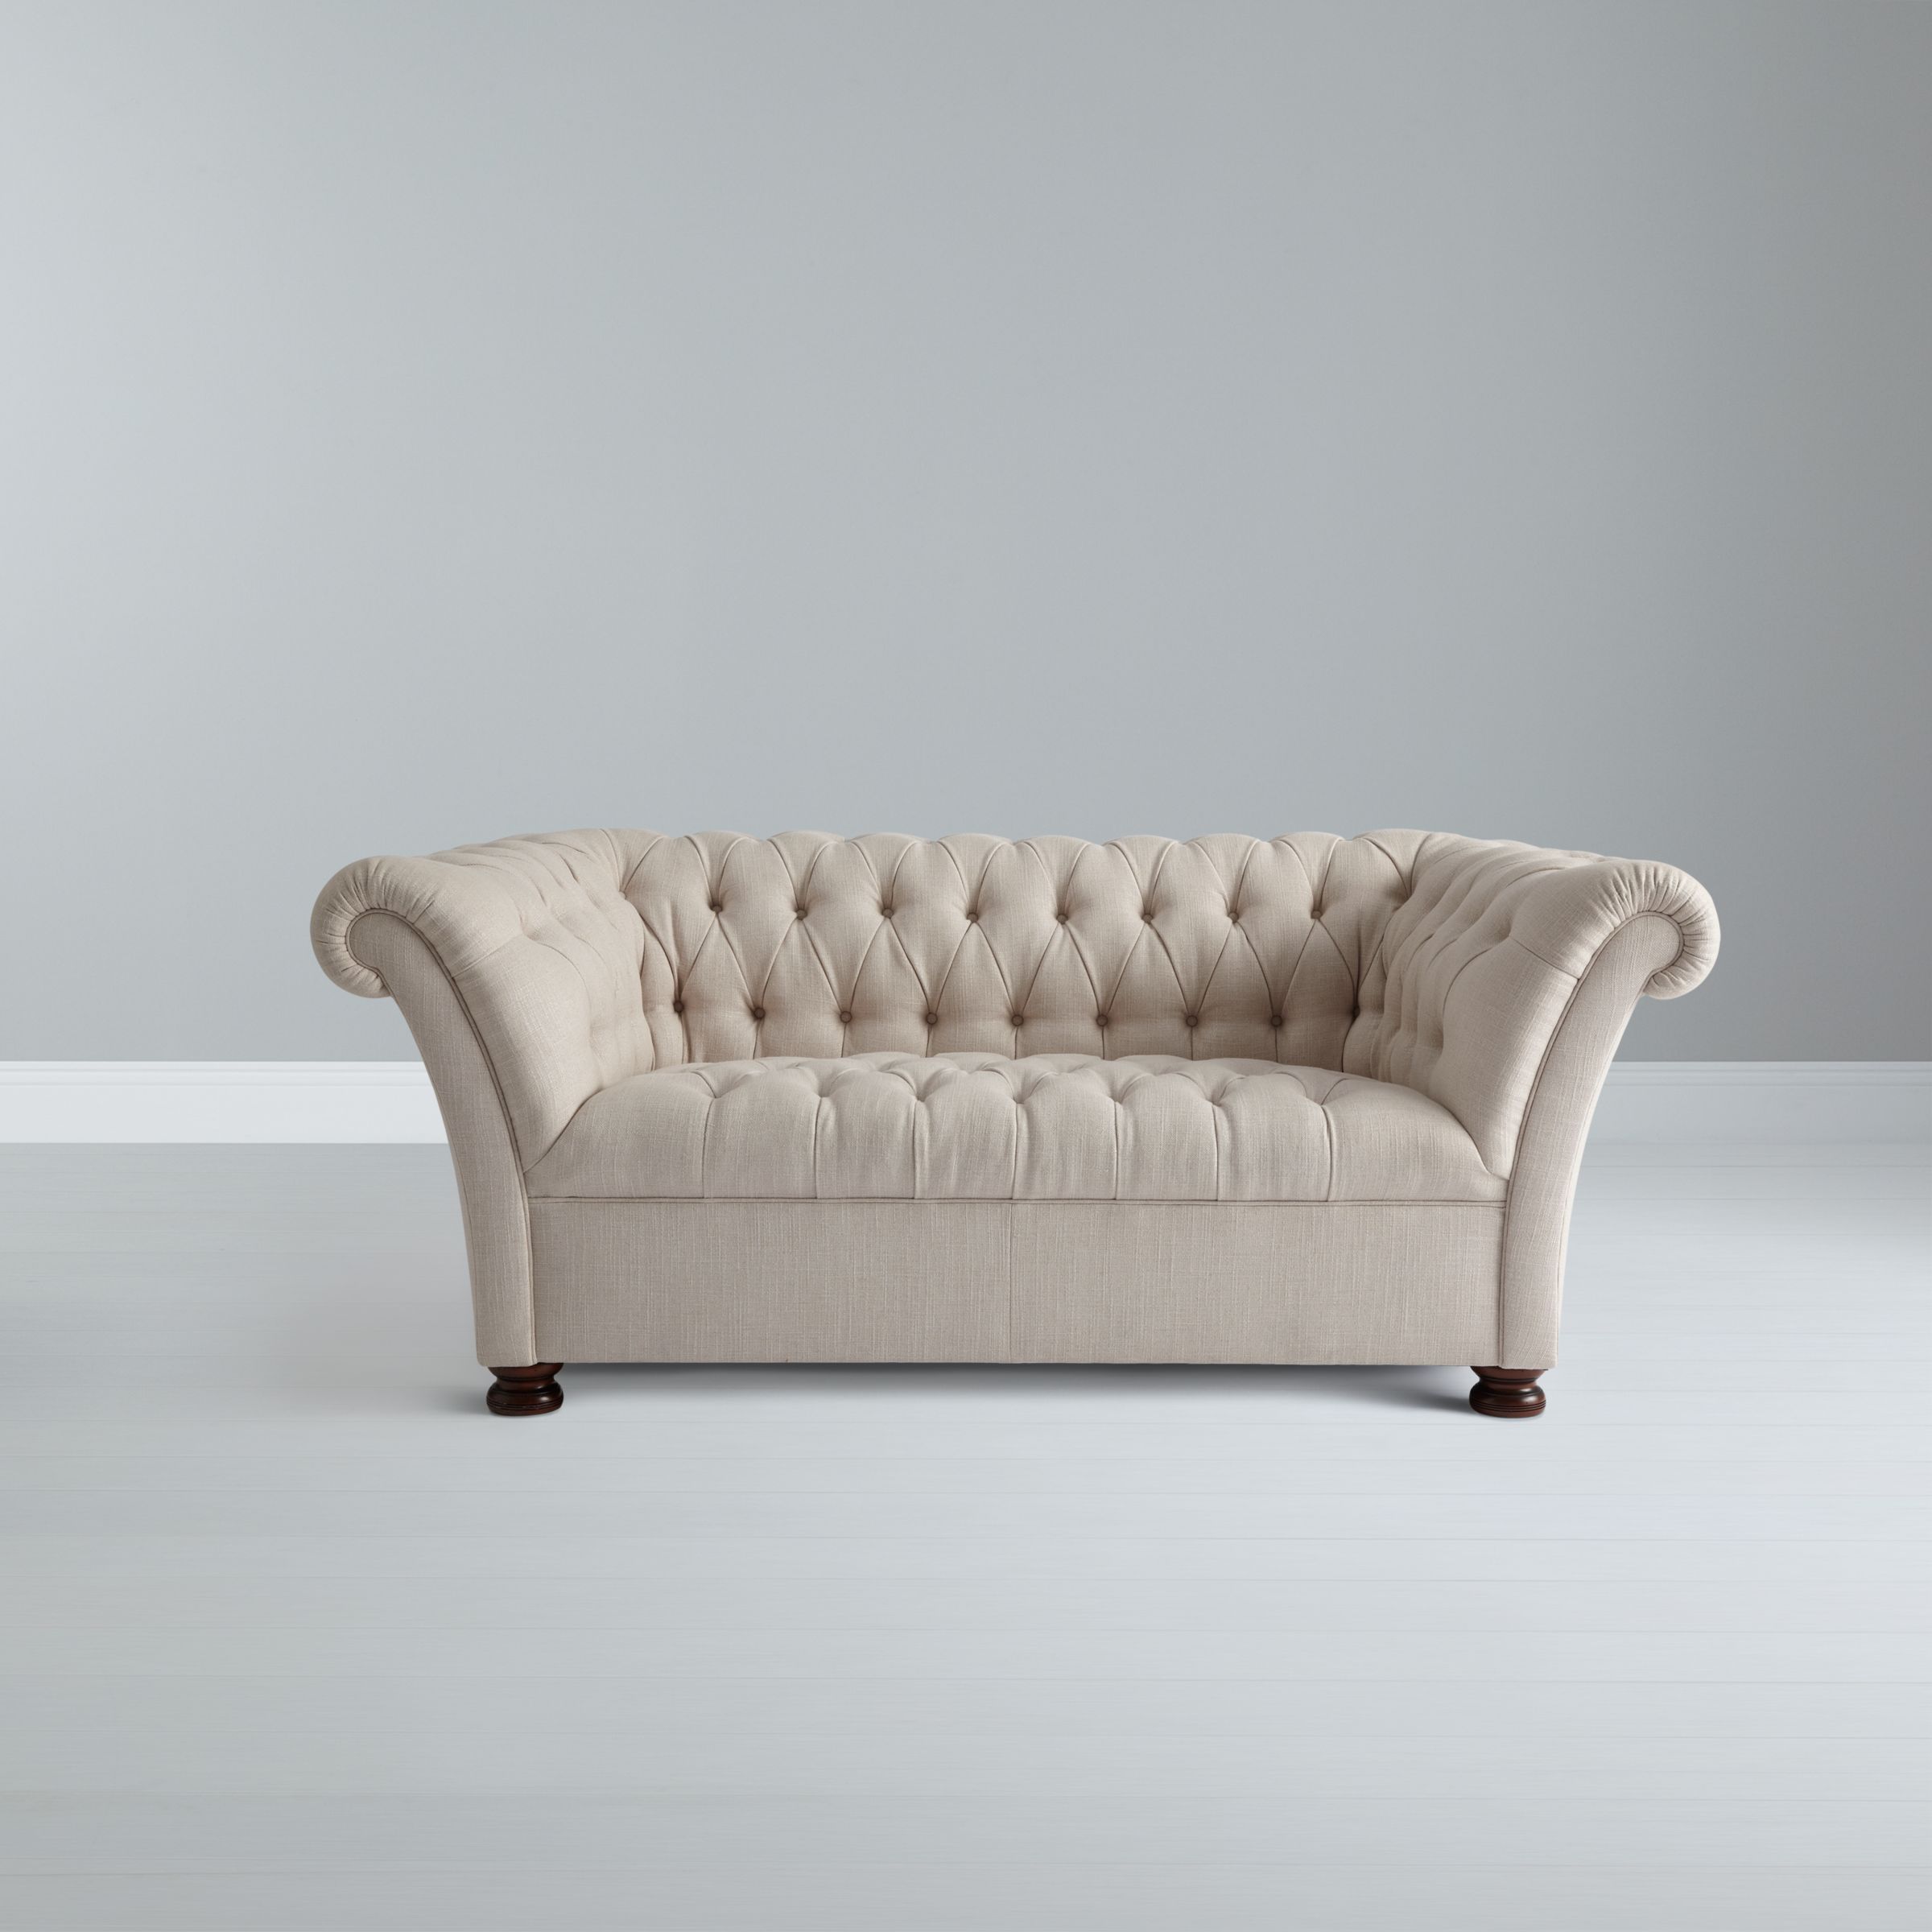 John Lewis Cambridge Large Chesterfield Sofa, Linen